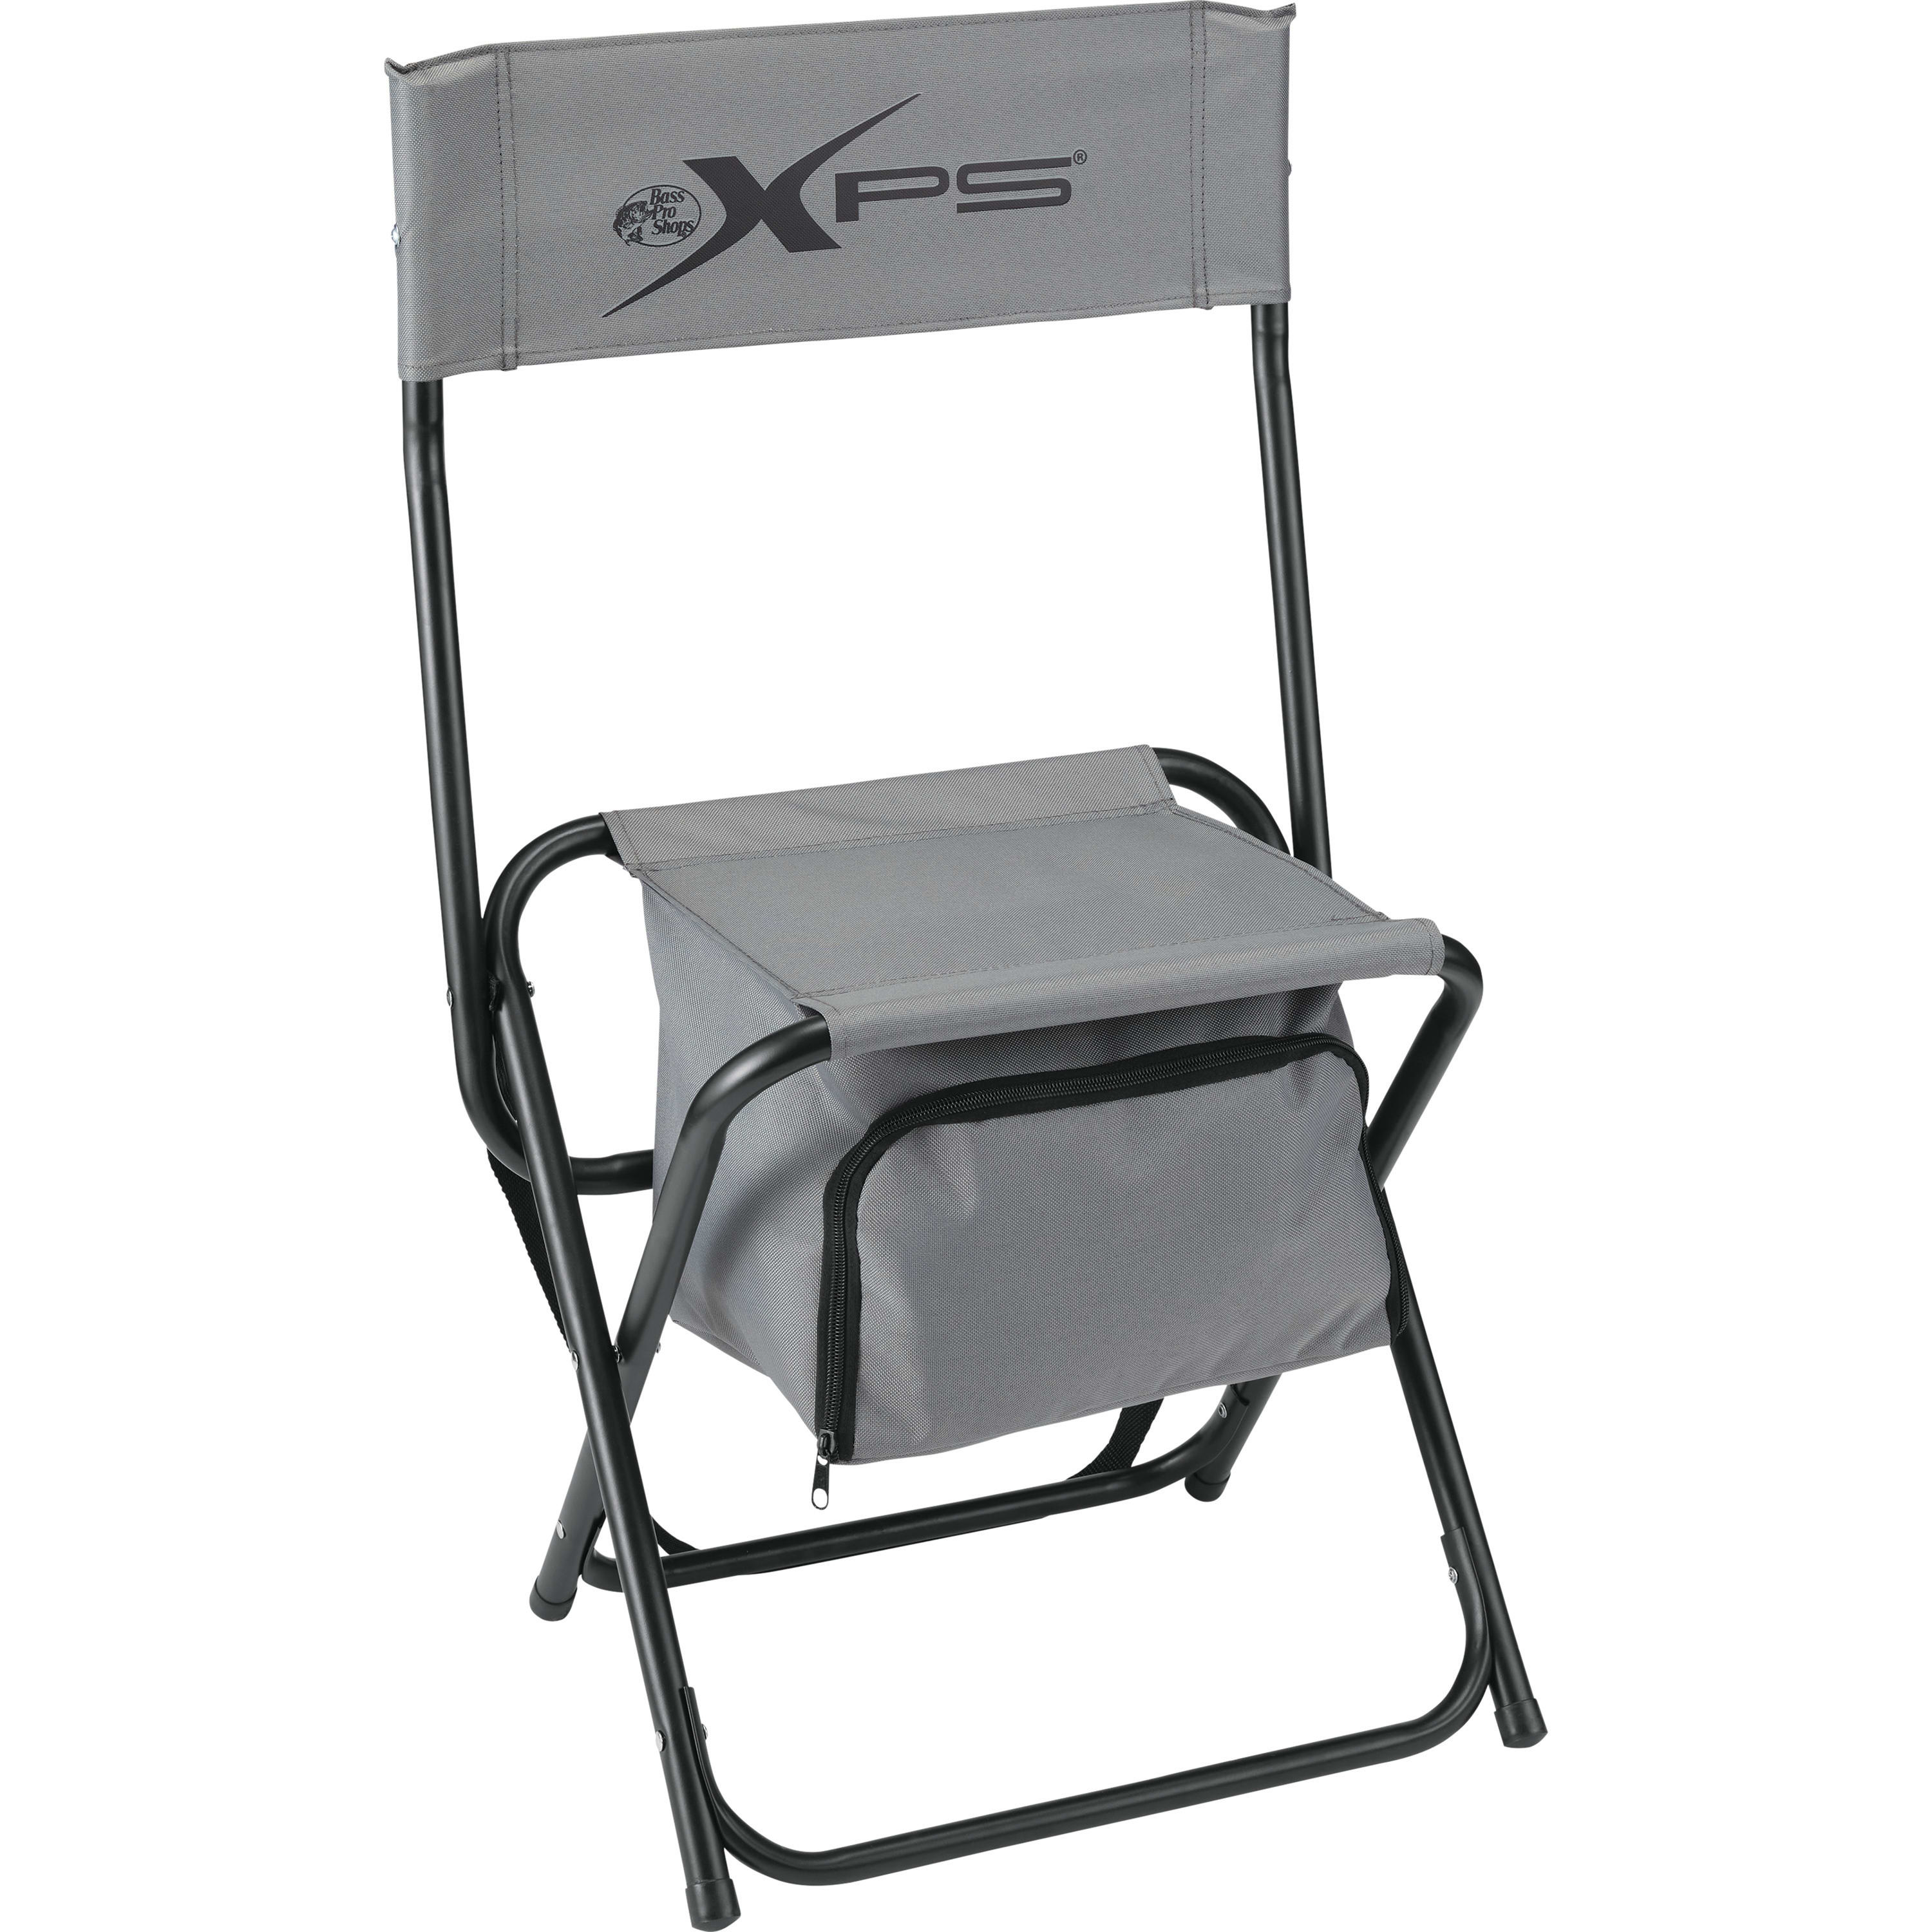 Bass Pro Shops XPS 4-Legged Ice Fishing Chair - Cabelas - XPS 